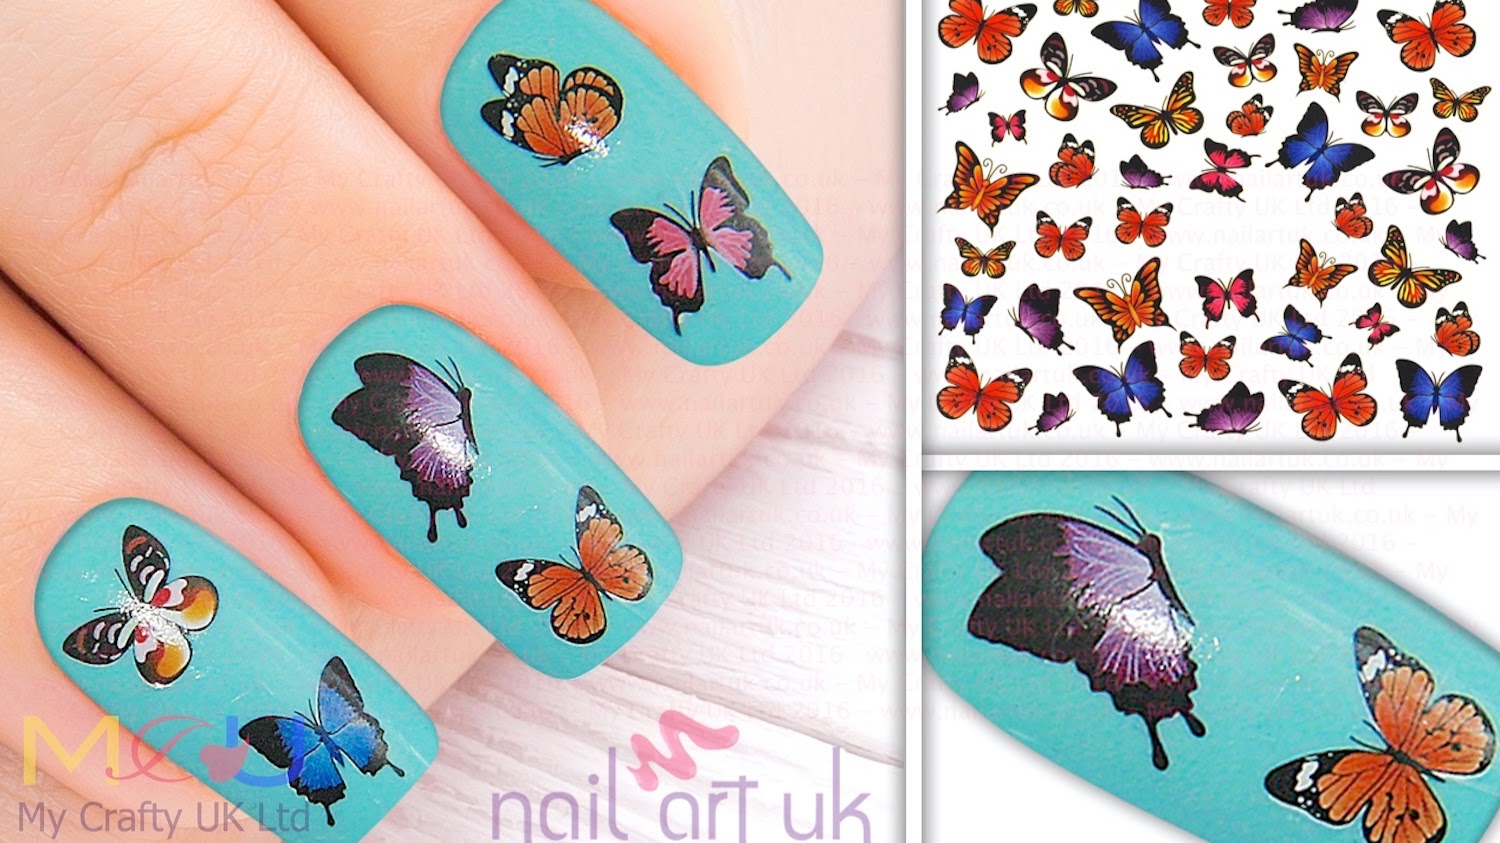 Nail Art UK